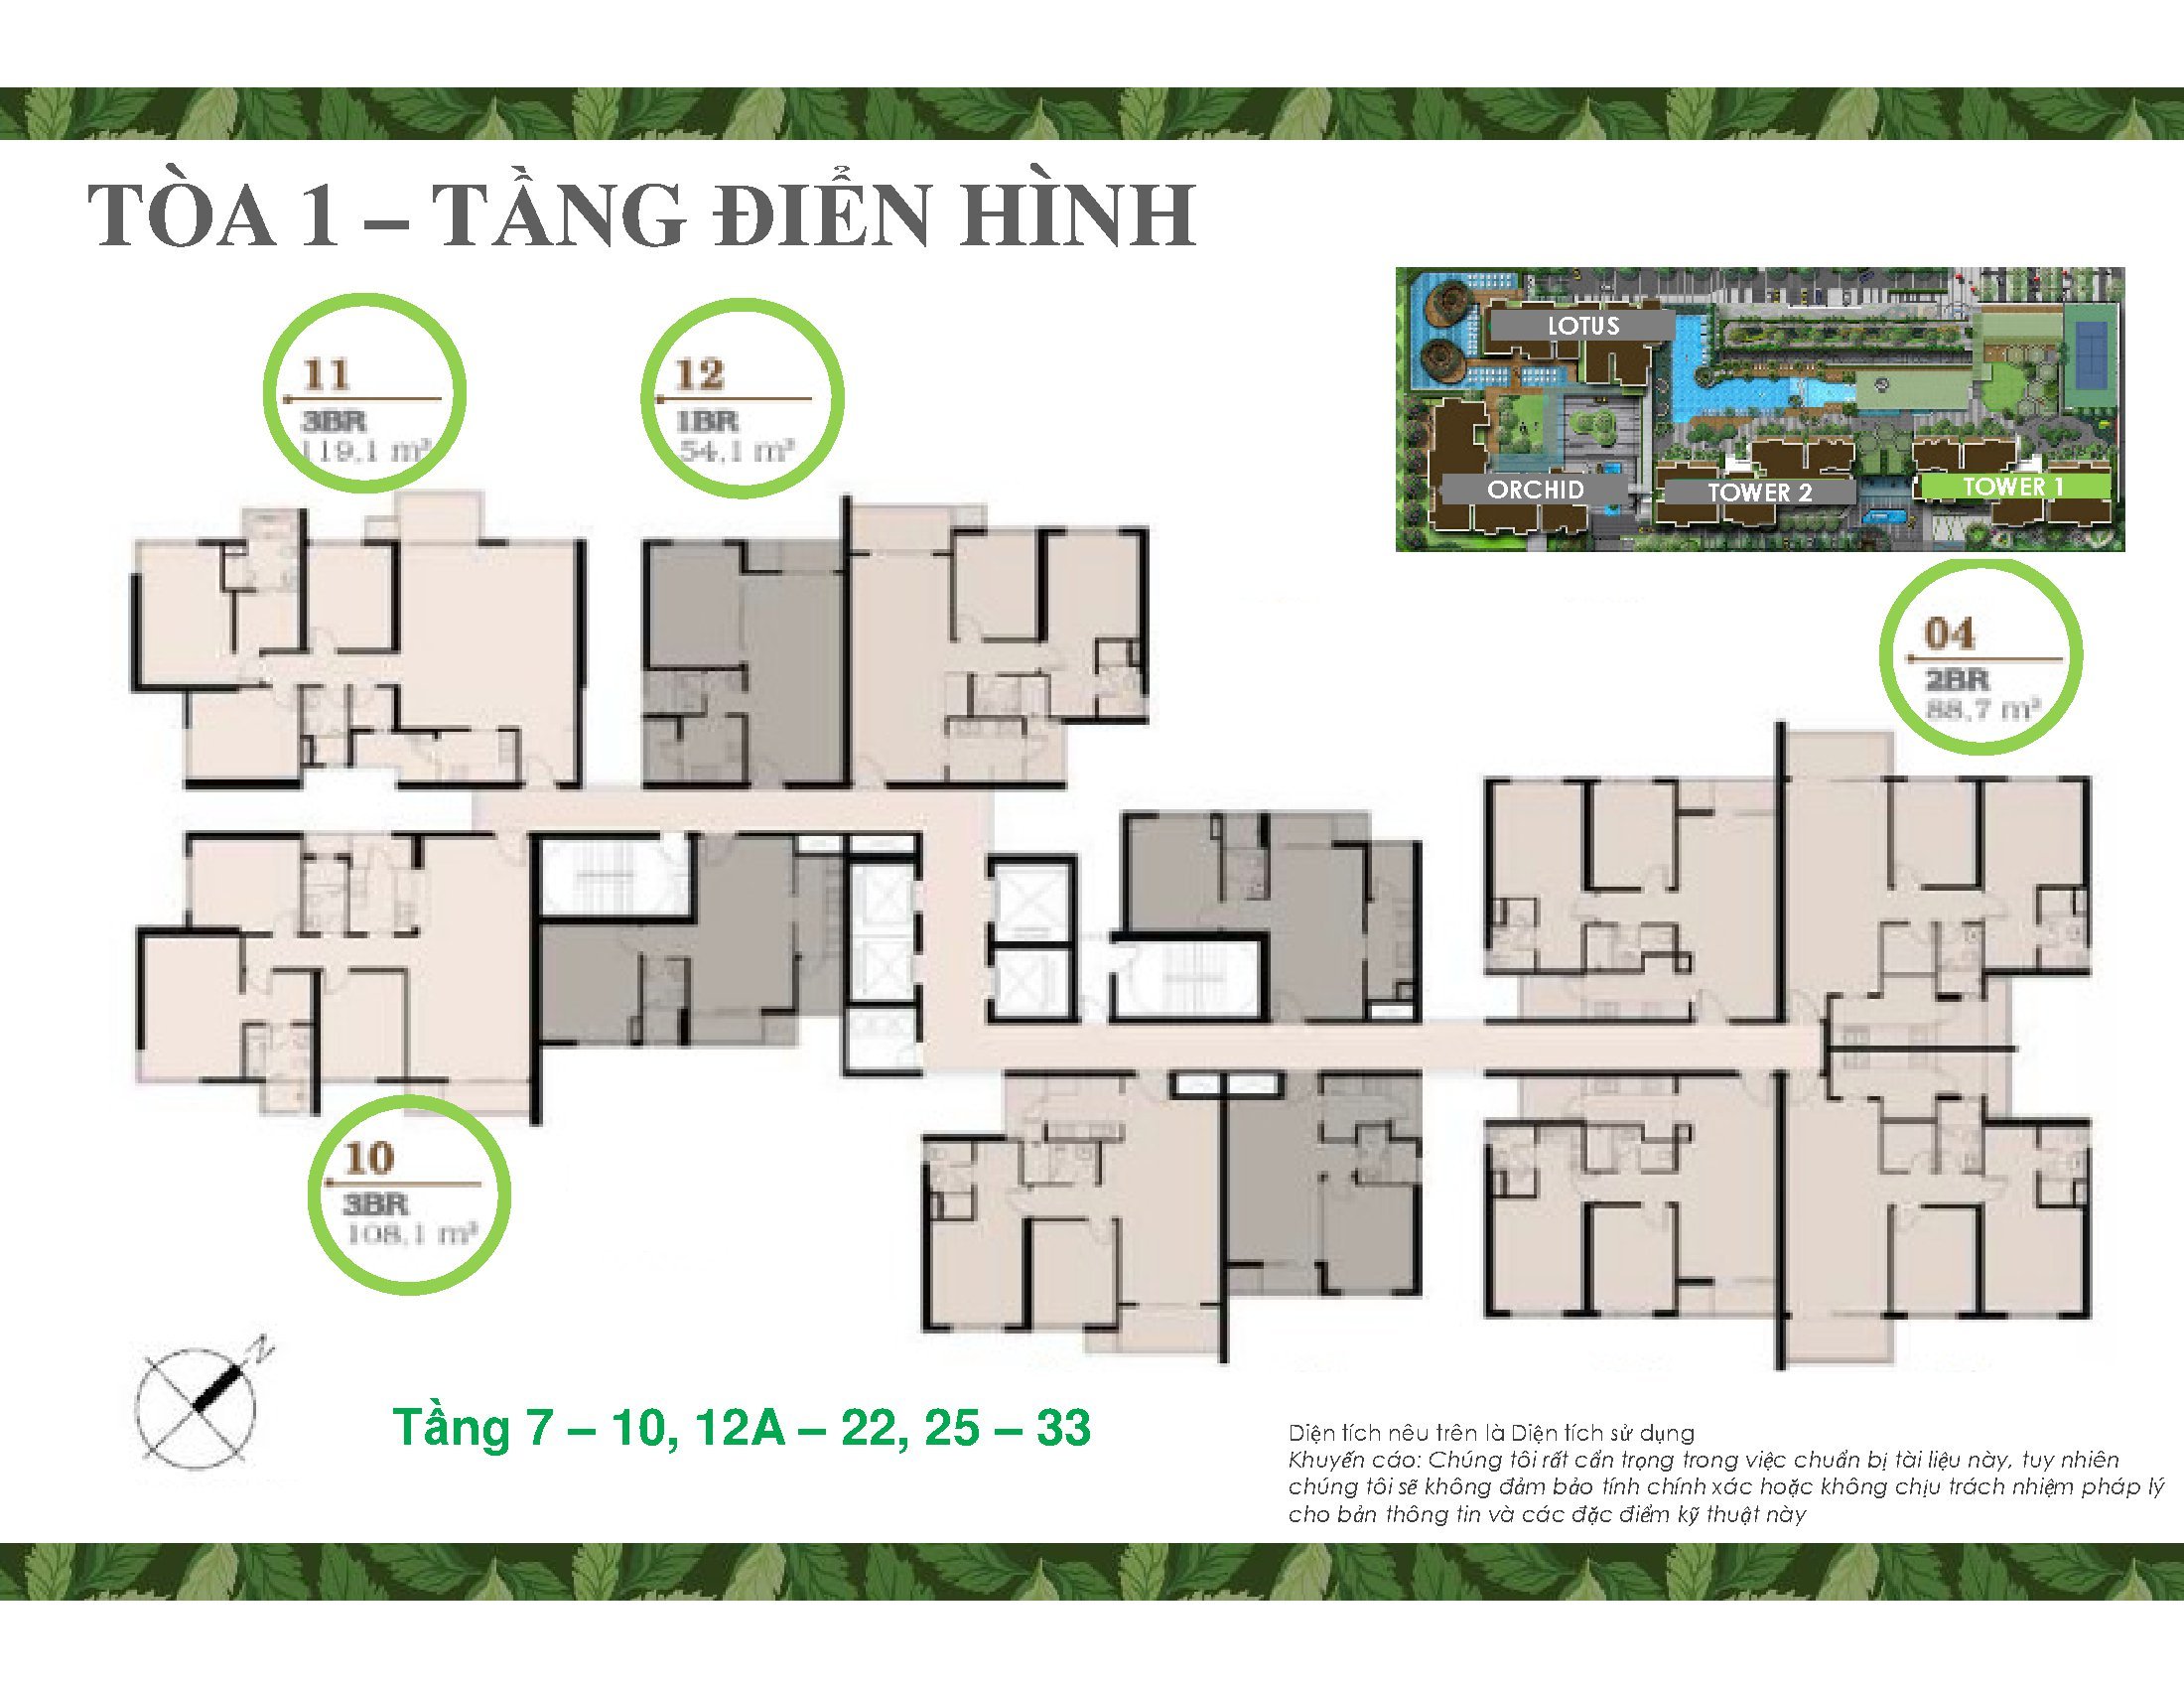 layout-mat-bang-tang-dien-hinh-tang-7-10-12A-22-25-33-toa-1-vista-verde